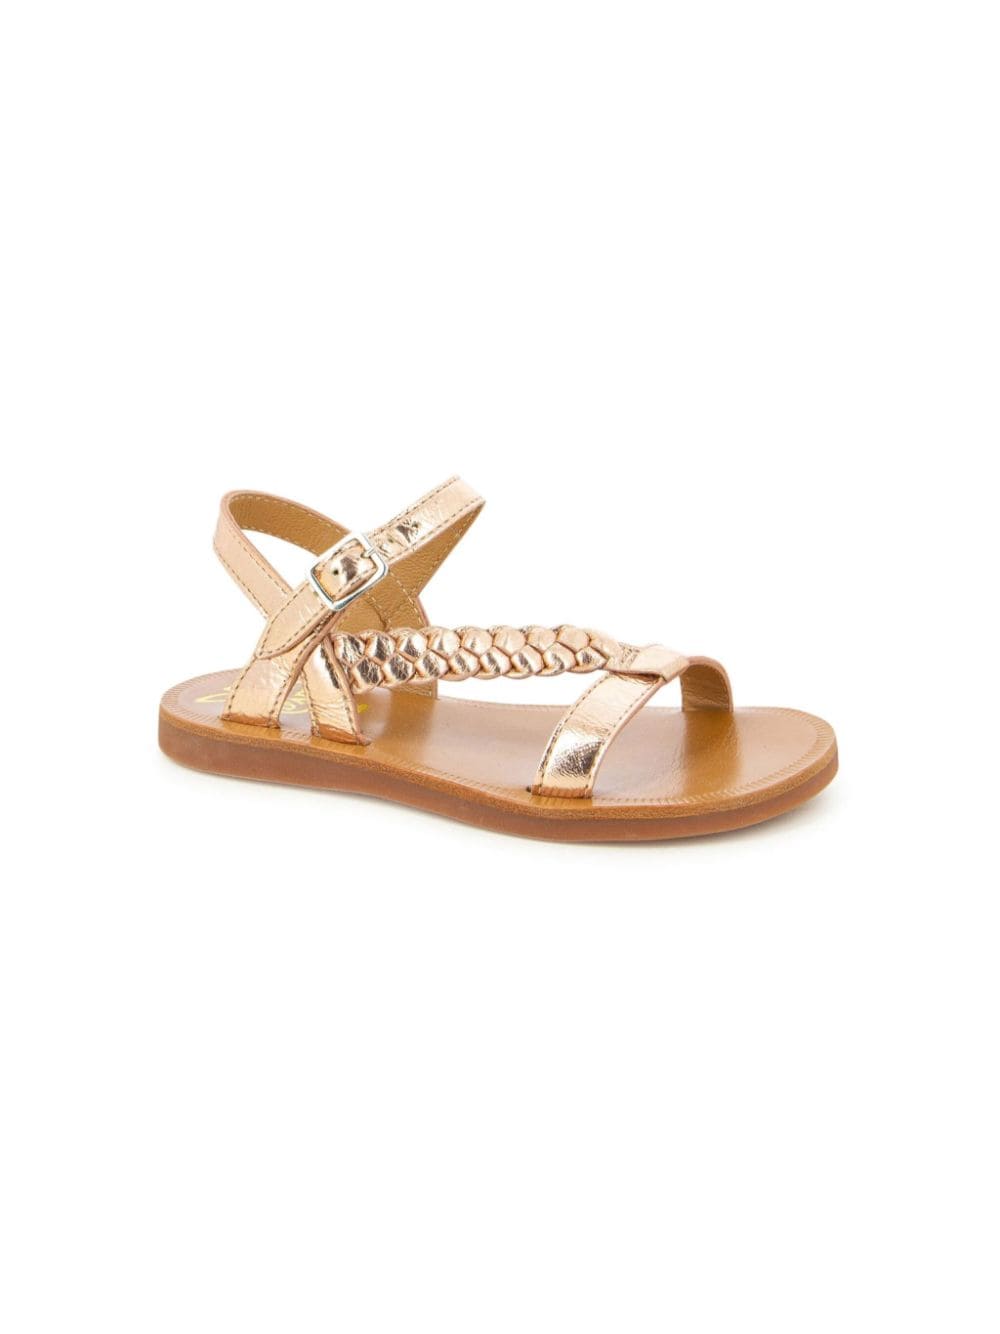 Pom D'api Plagette Antik leather sandals - Gold von Pom D'api